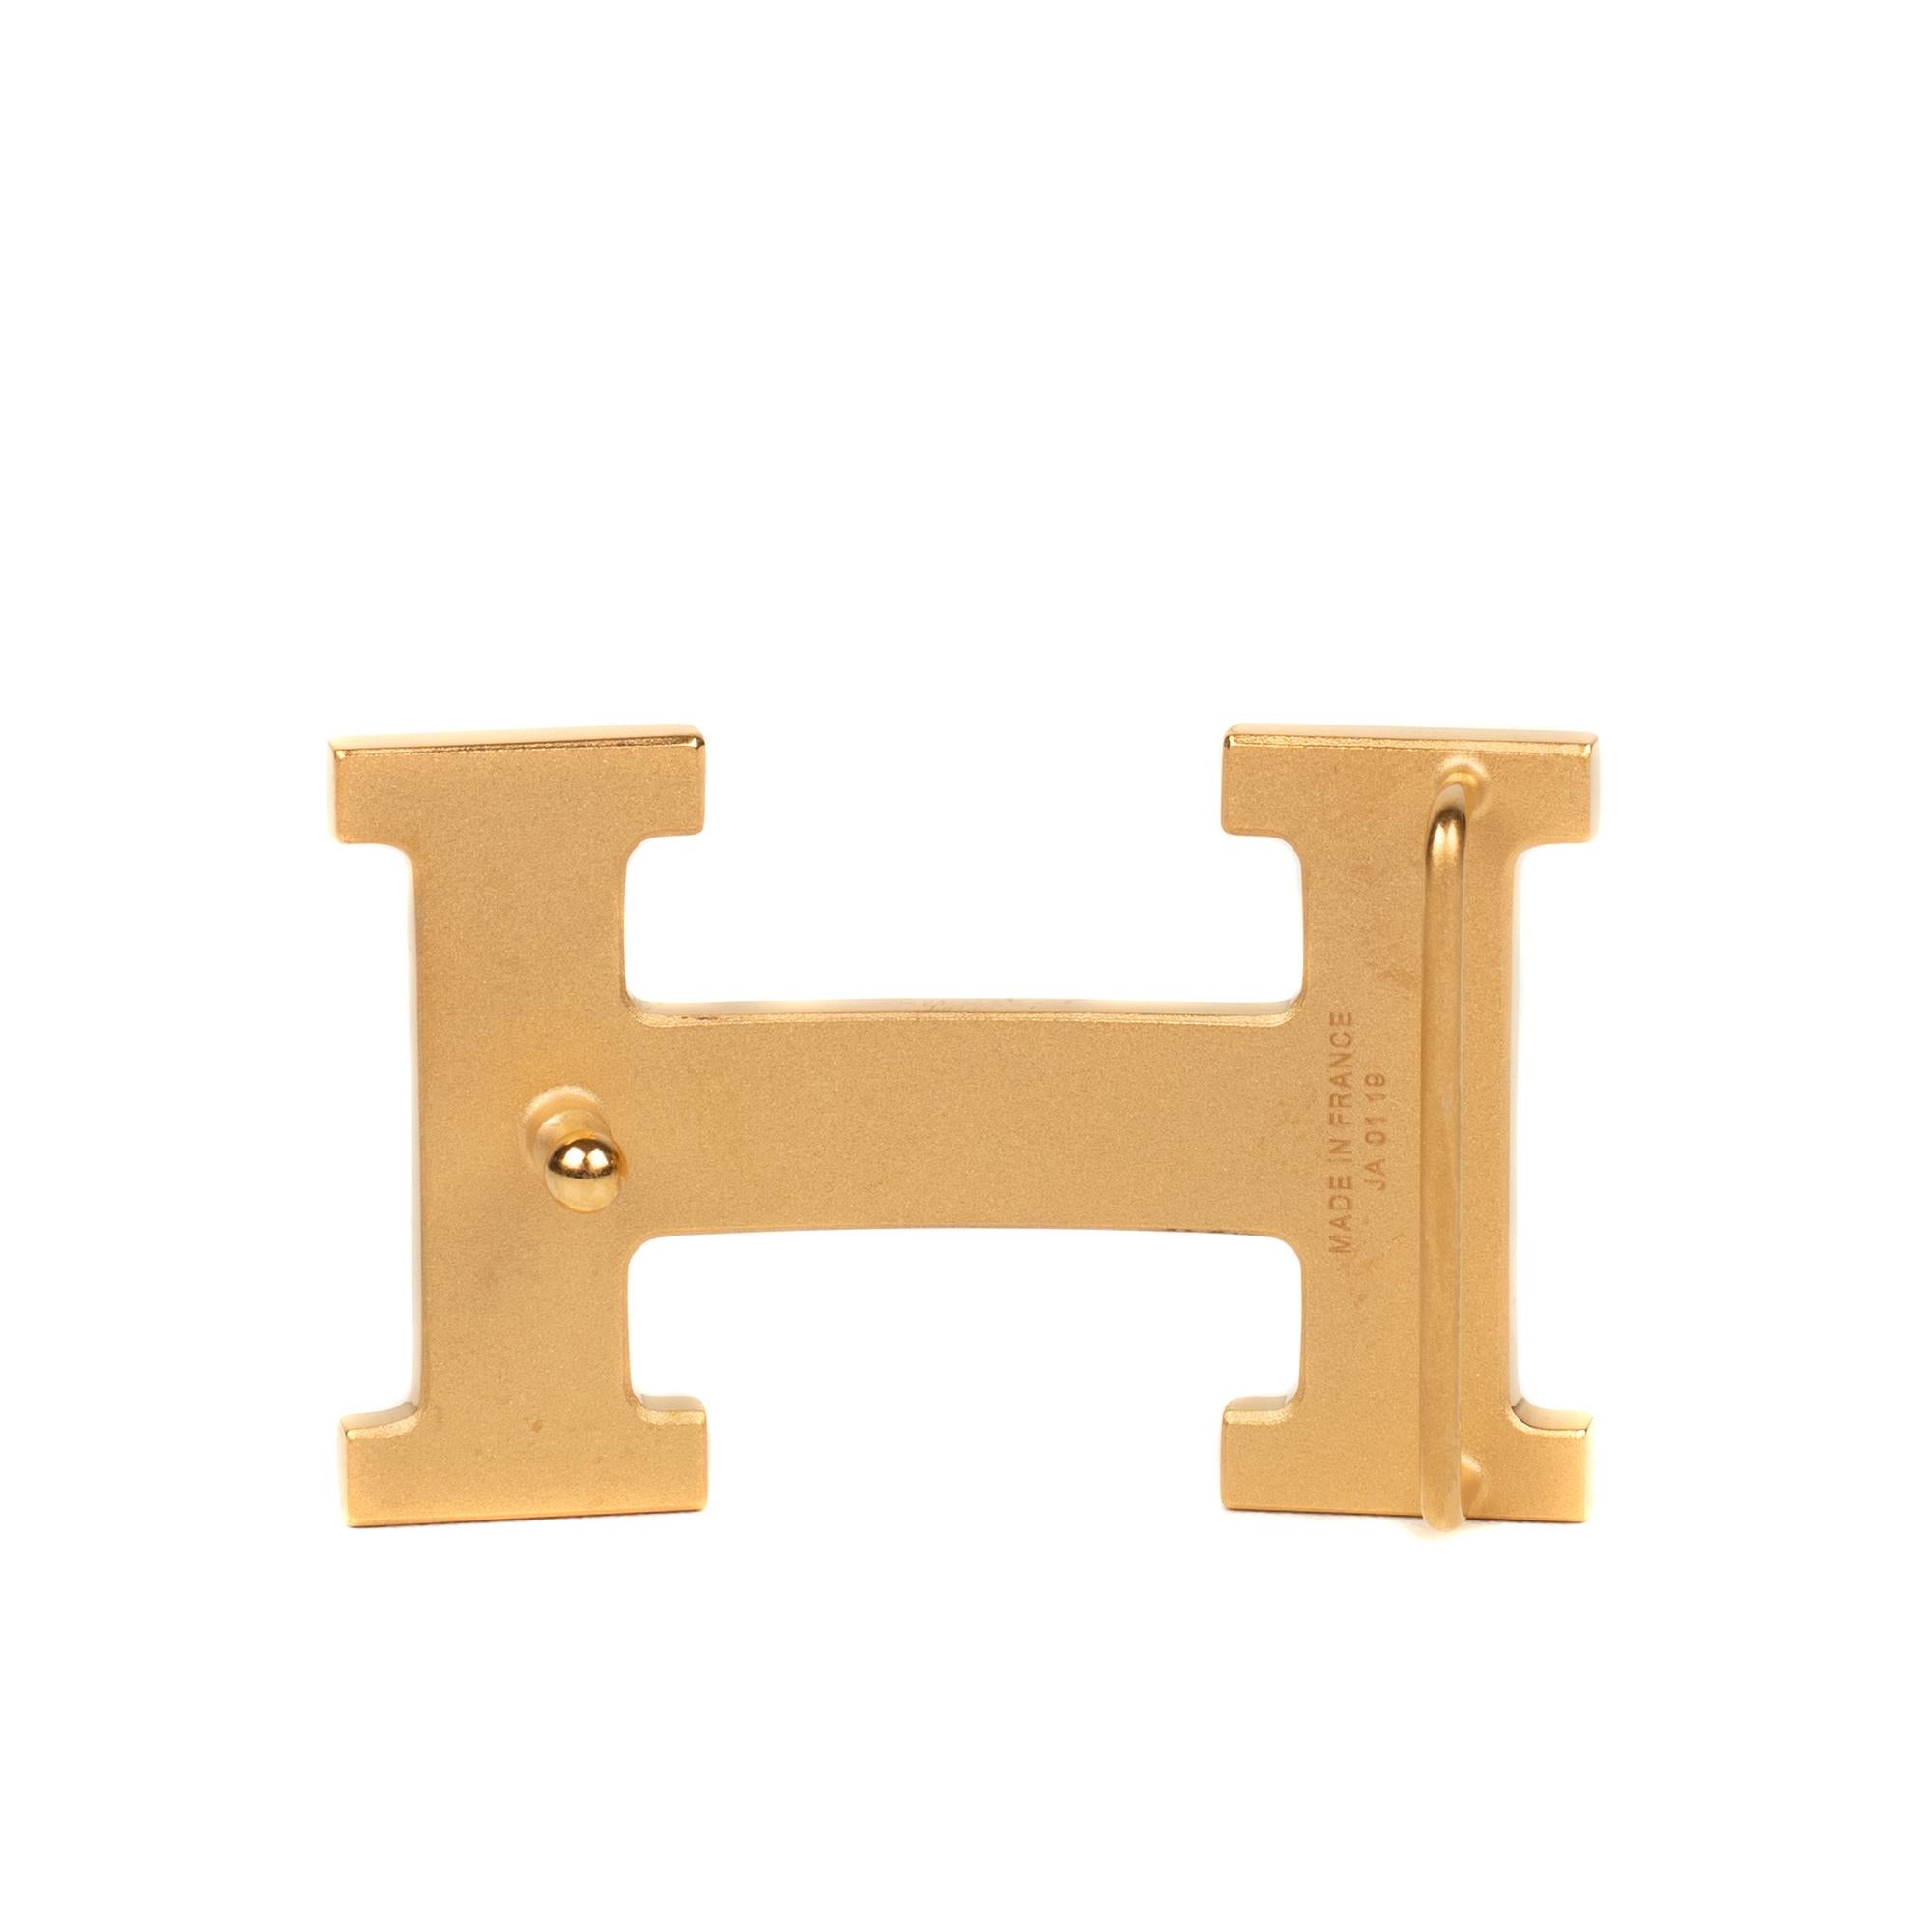 Type: Belt buckle 
Brand: Hermès
Model: Calandre
Material: Shiny steel
Color: Golden
Signed HERMES on the slice 
Form: HPour leather link 3.2 cm wide (leather link not included)
Dimensions: H: 3.7 x W: 6 x D: 1.4 cm
Never worn